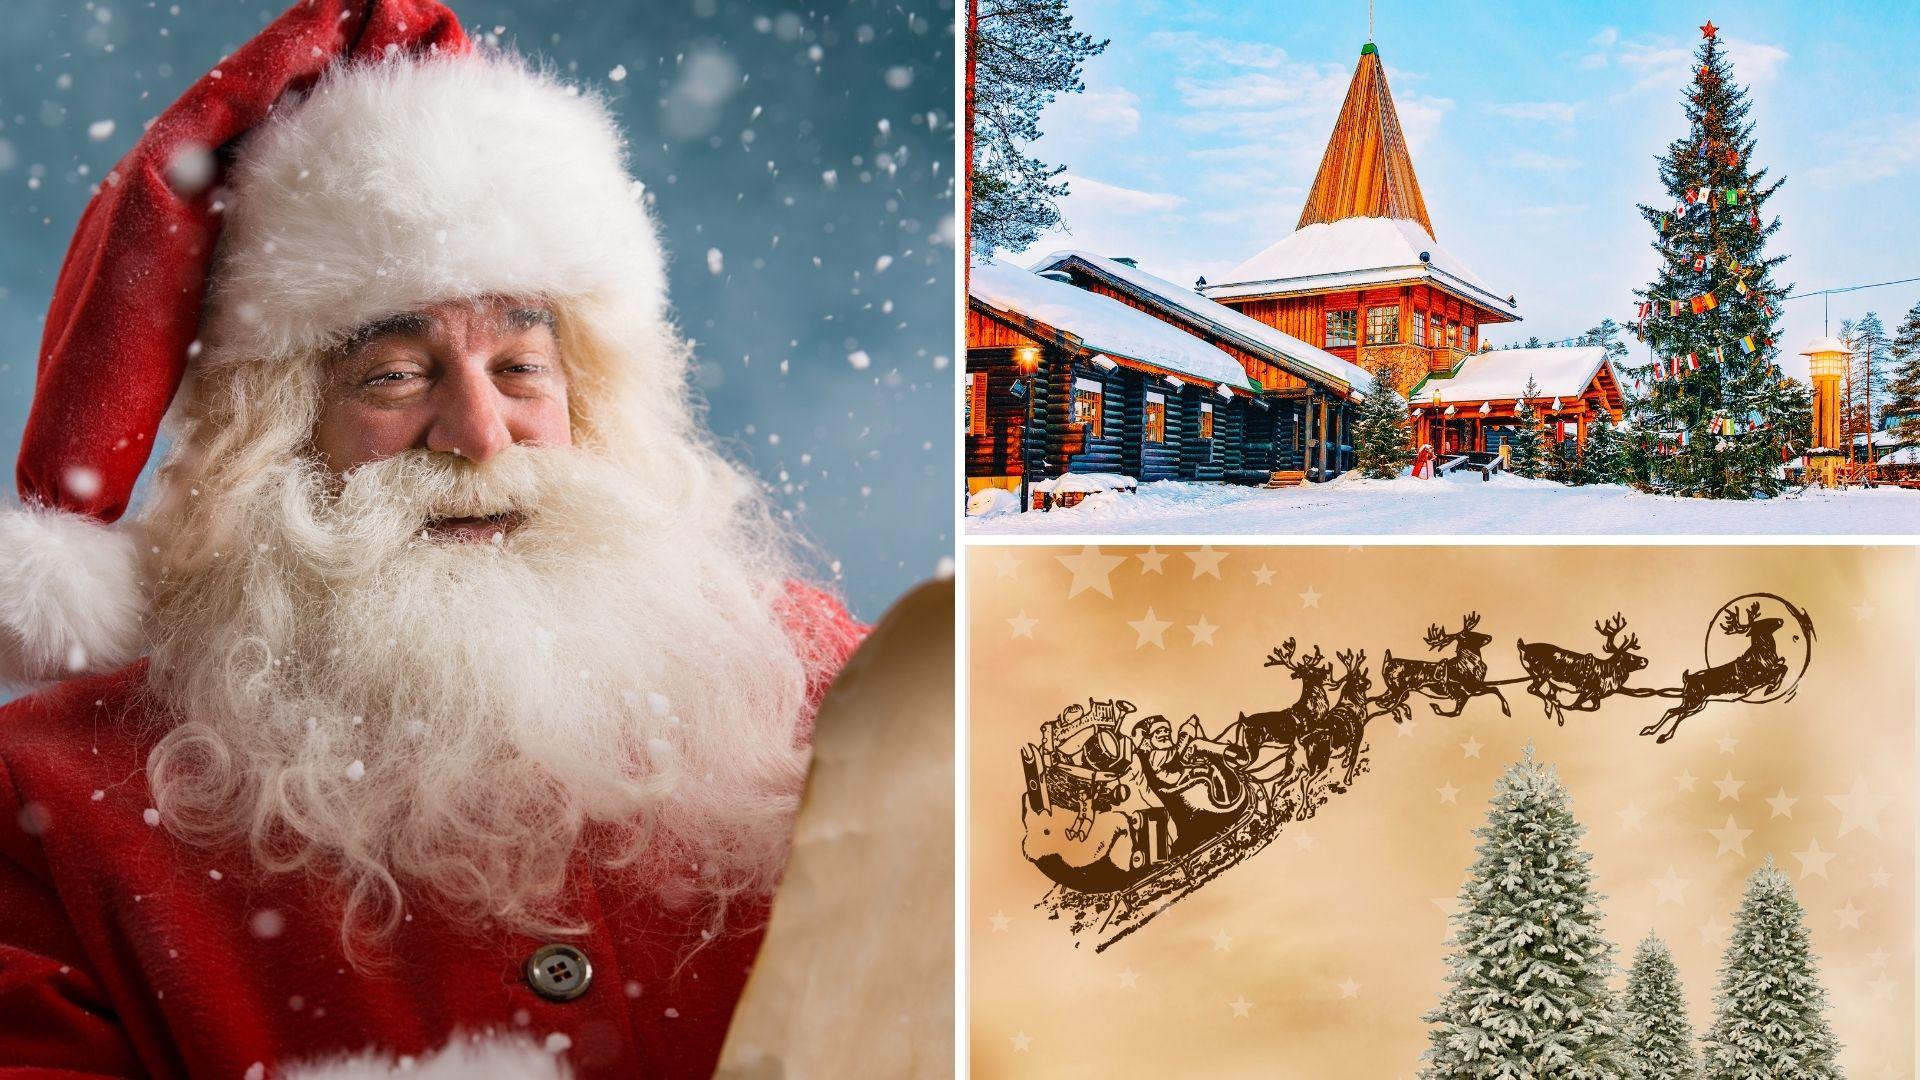 Santa Claus in Finland